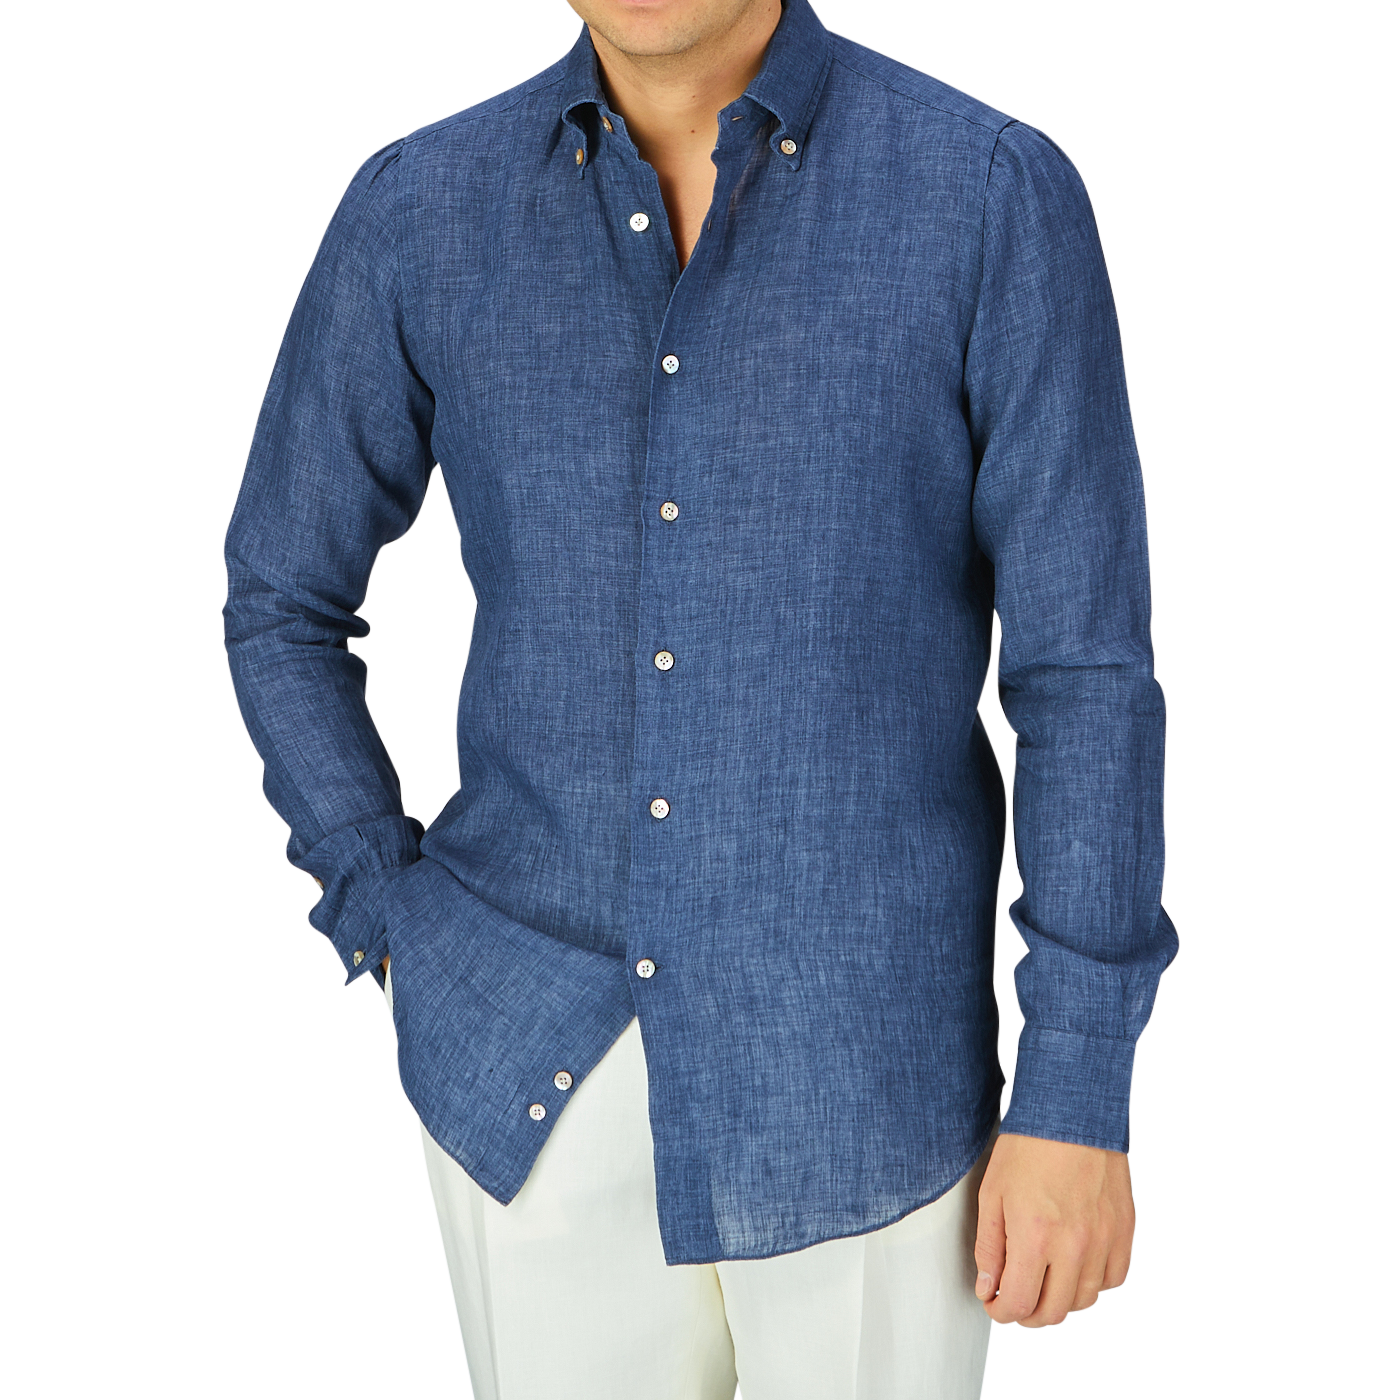 A man wearing an Indigo Blue Organic Linen BD Slim Shirt by Italian shirtmaker Mazzarelli and white pants.